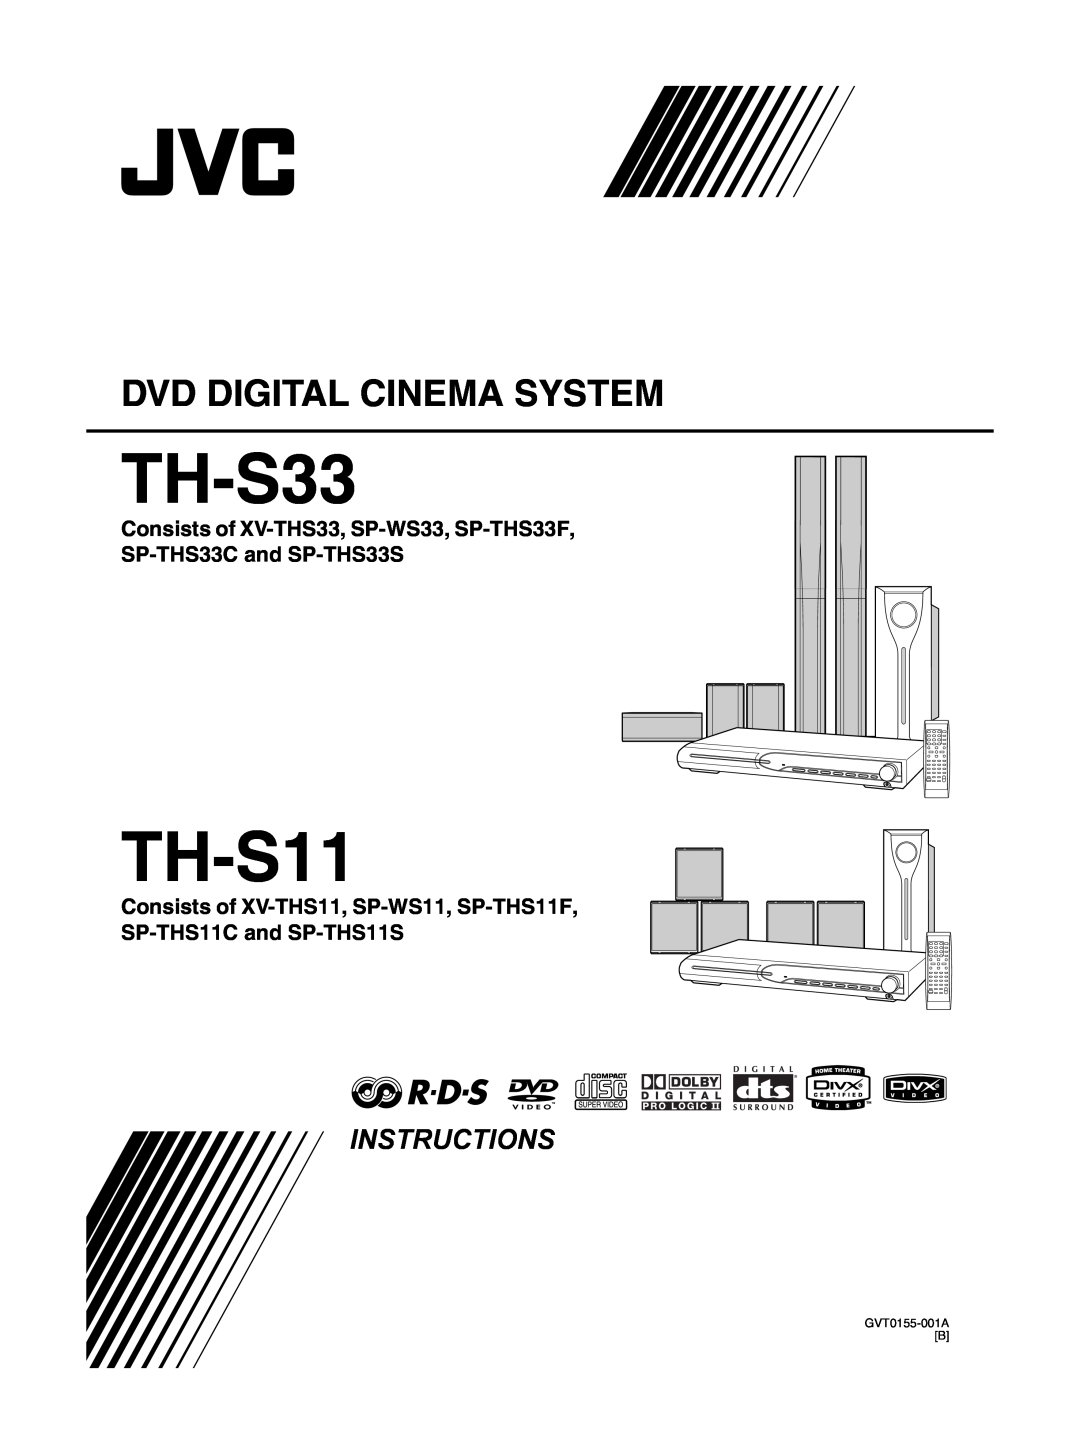 JVC GVT0155-001A manual Dvd Digital Cinema System, Instructions 